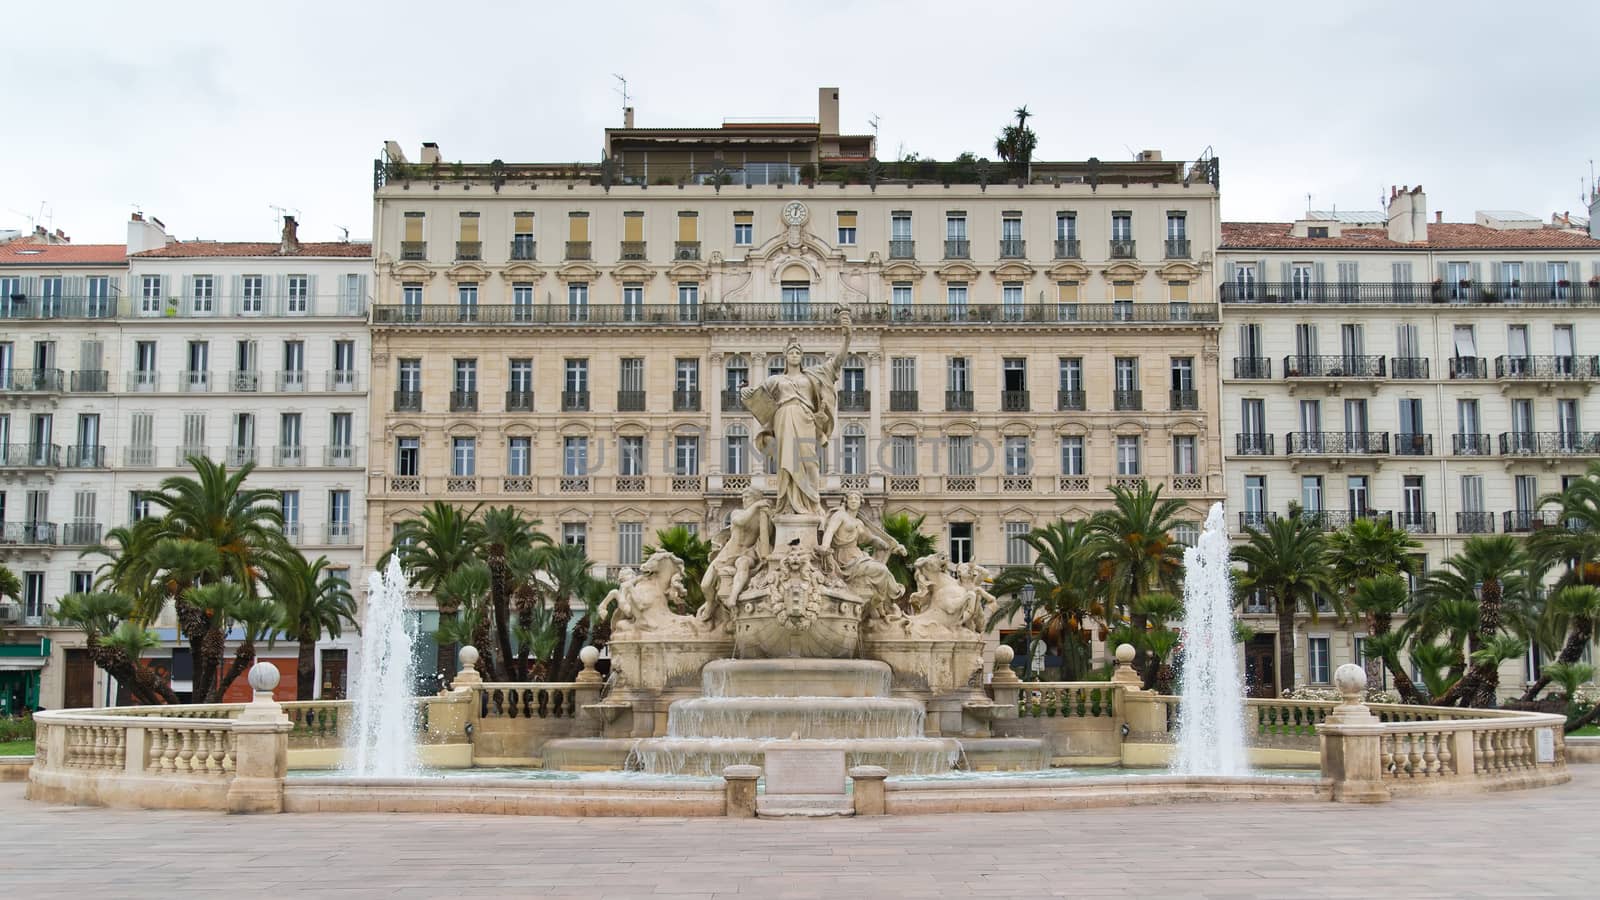 Place de la Libert�� - fountain of Liberty square in Toulon by furzyk73